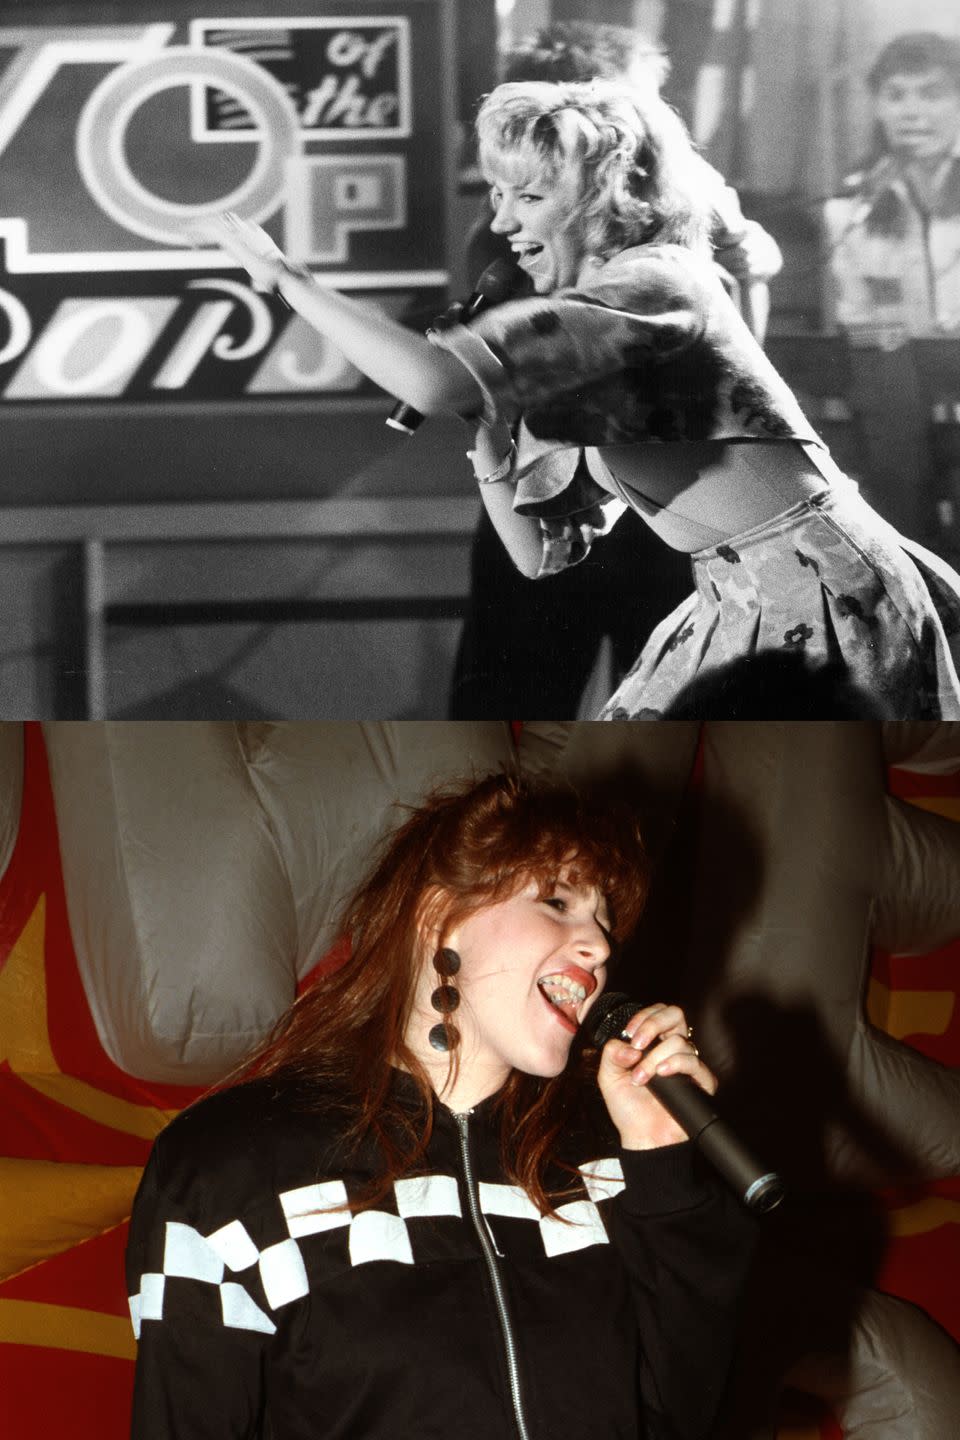 1987: Debbie Gibson vs. Tiffany